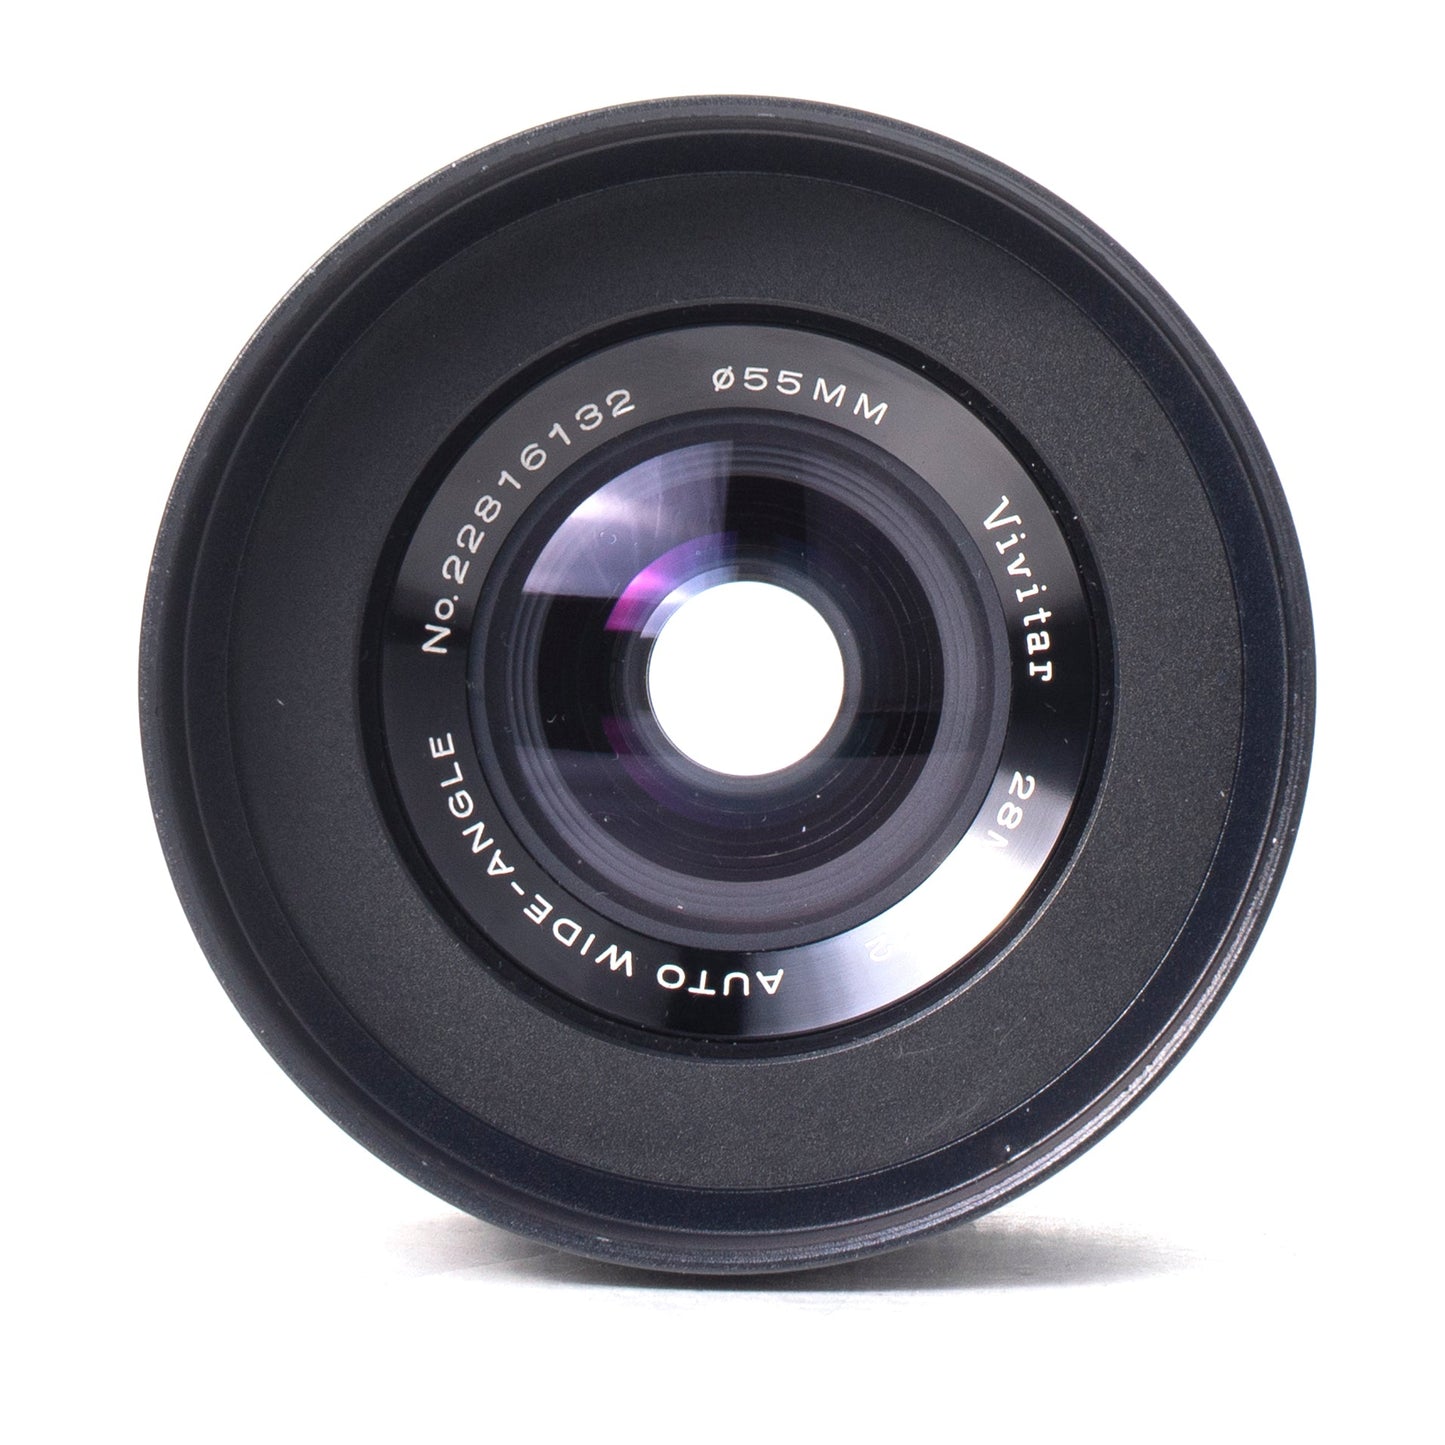 Vivitar Auto Wide-Angle 28mm F2 Cine Mod Vintage Prime Lens For Sony E-mount! - TerPhoto Store